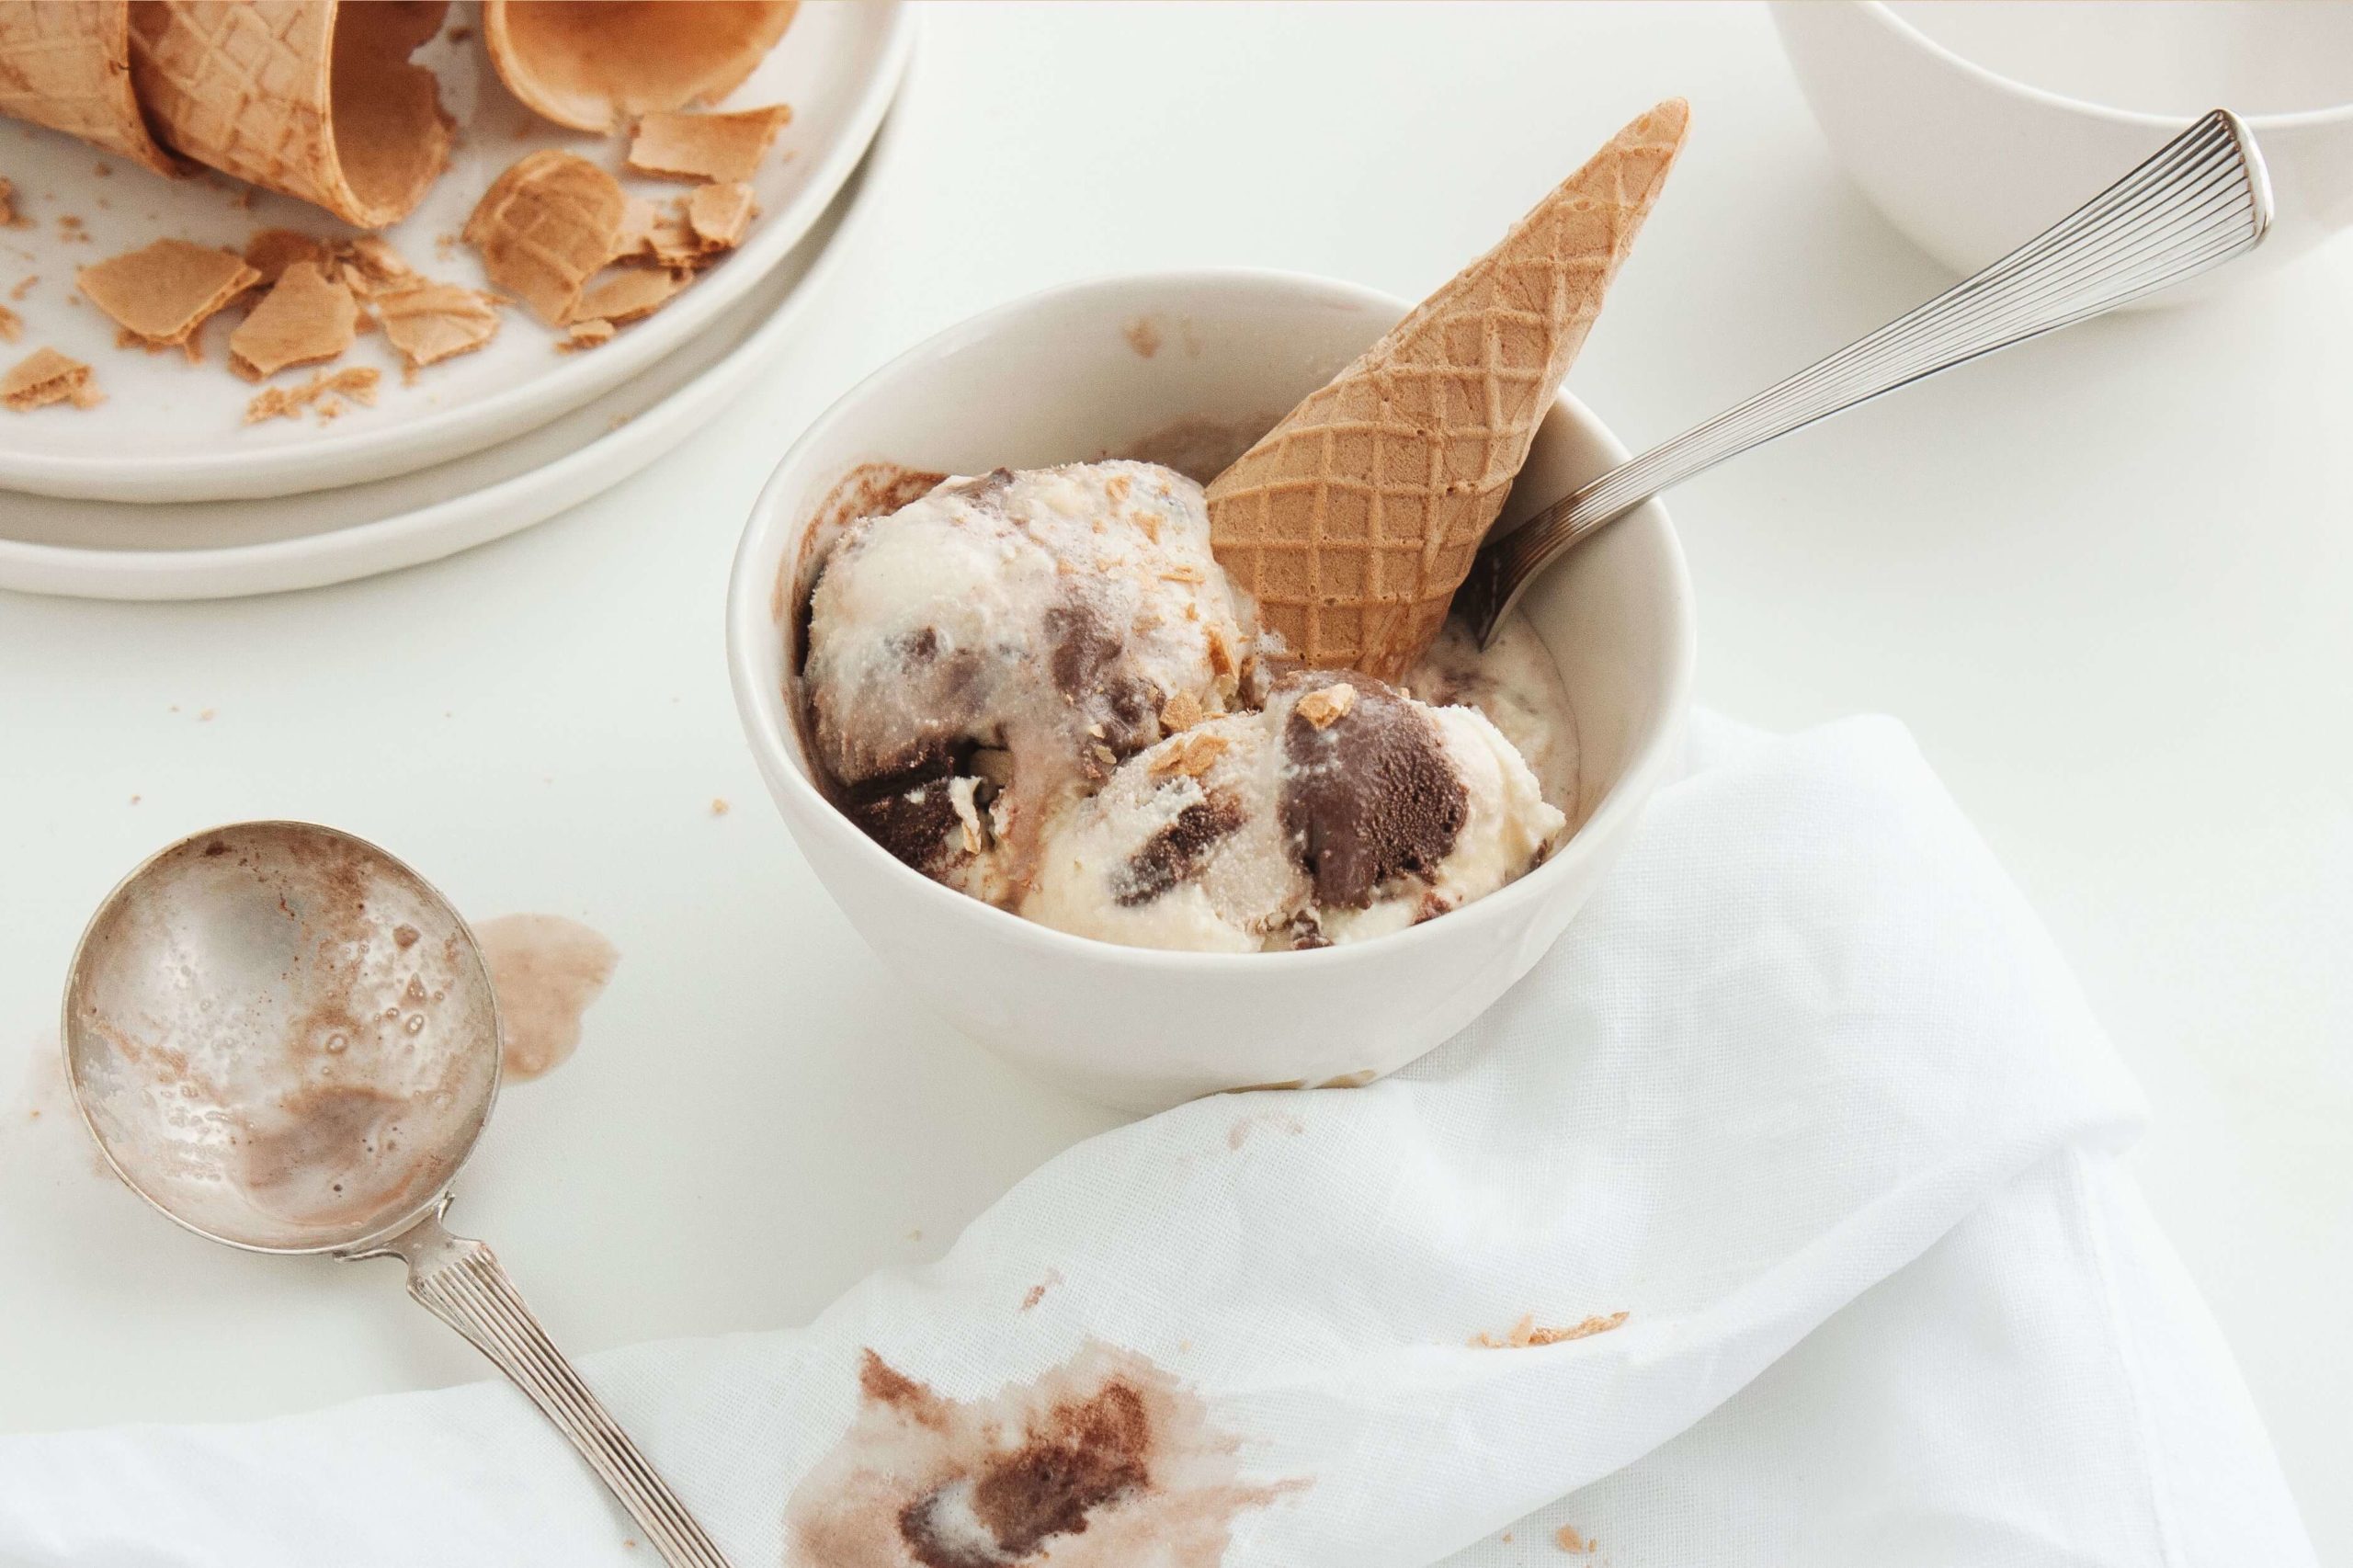 3- Chocolate ice cream stains